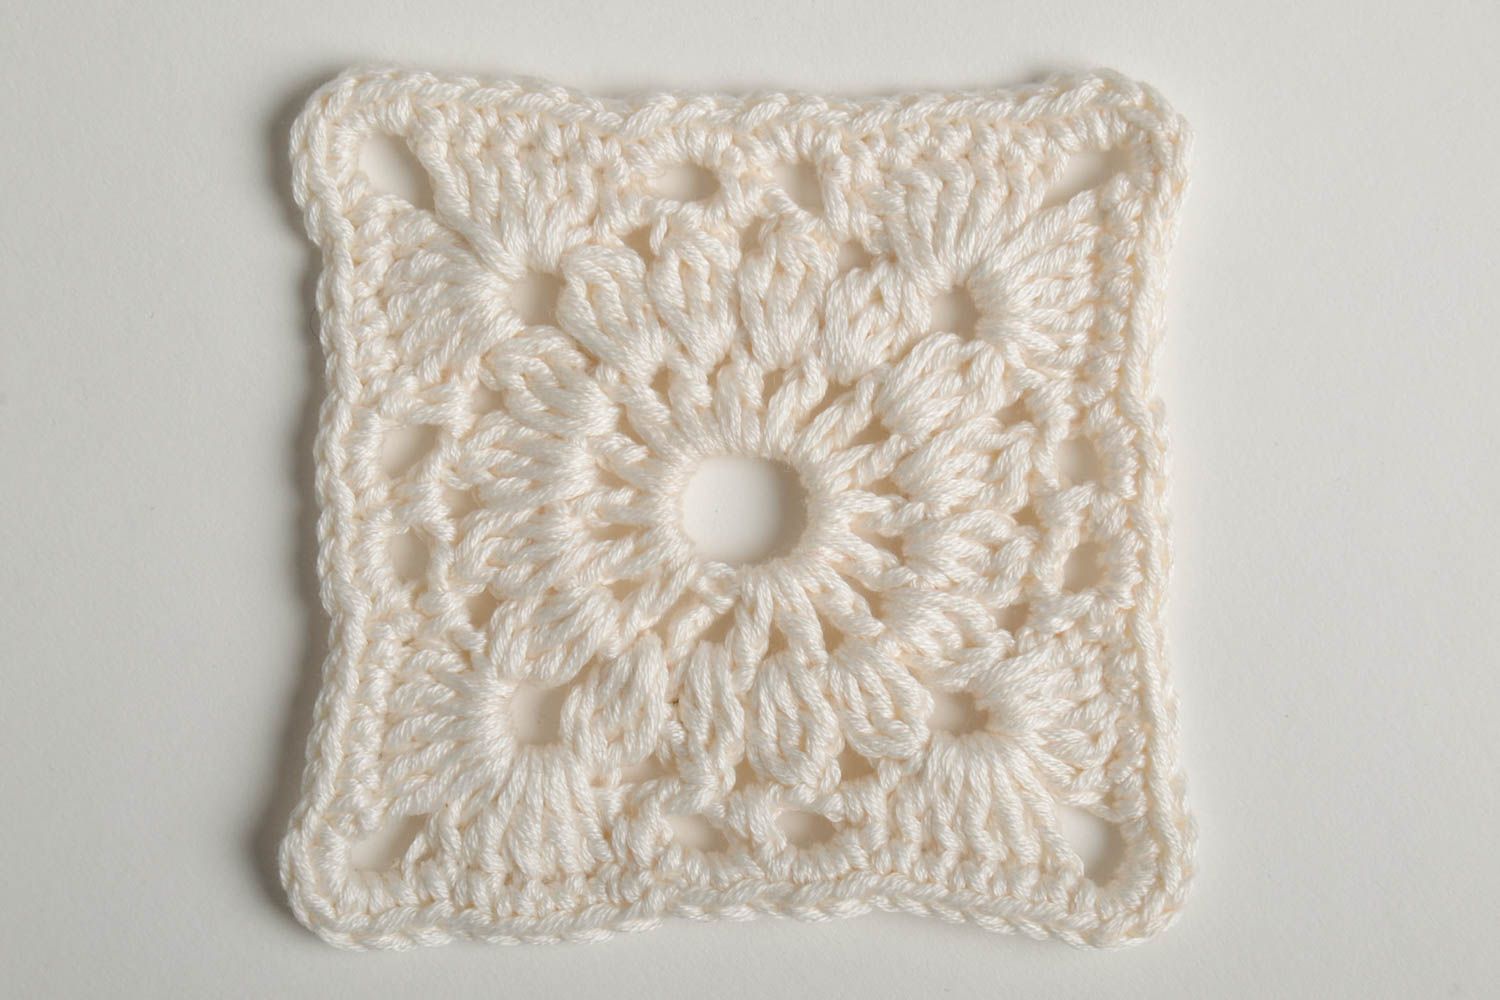 Unusual handmade crochet coaster hot pads interior decorating crochet ideas photo 2